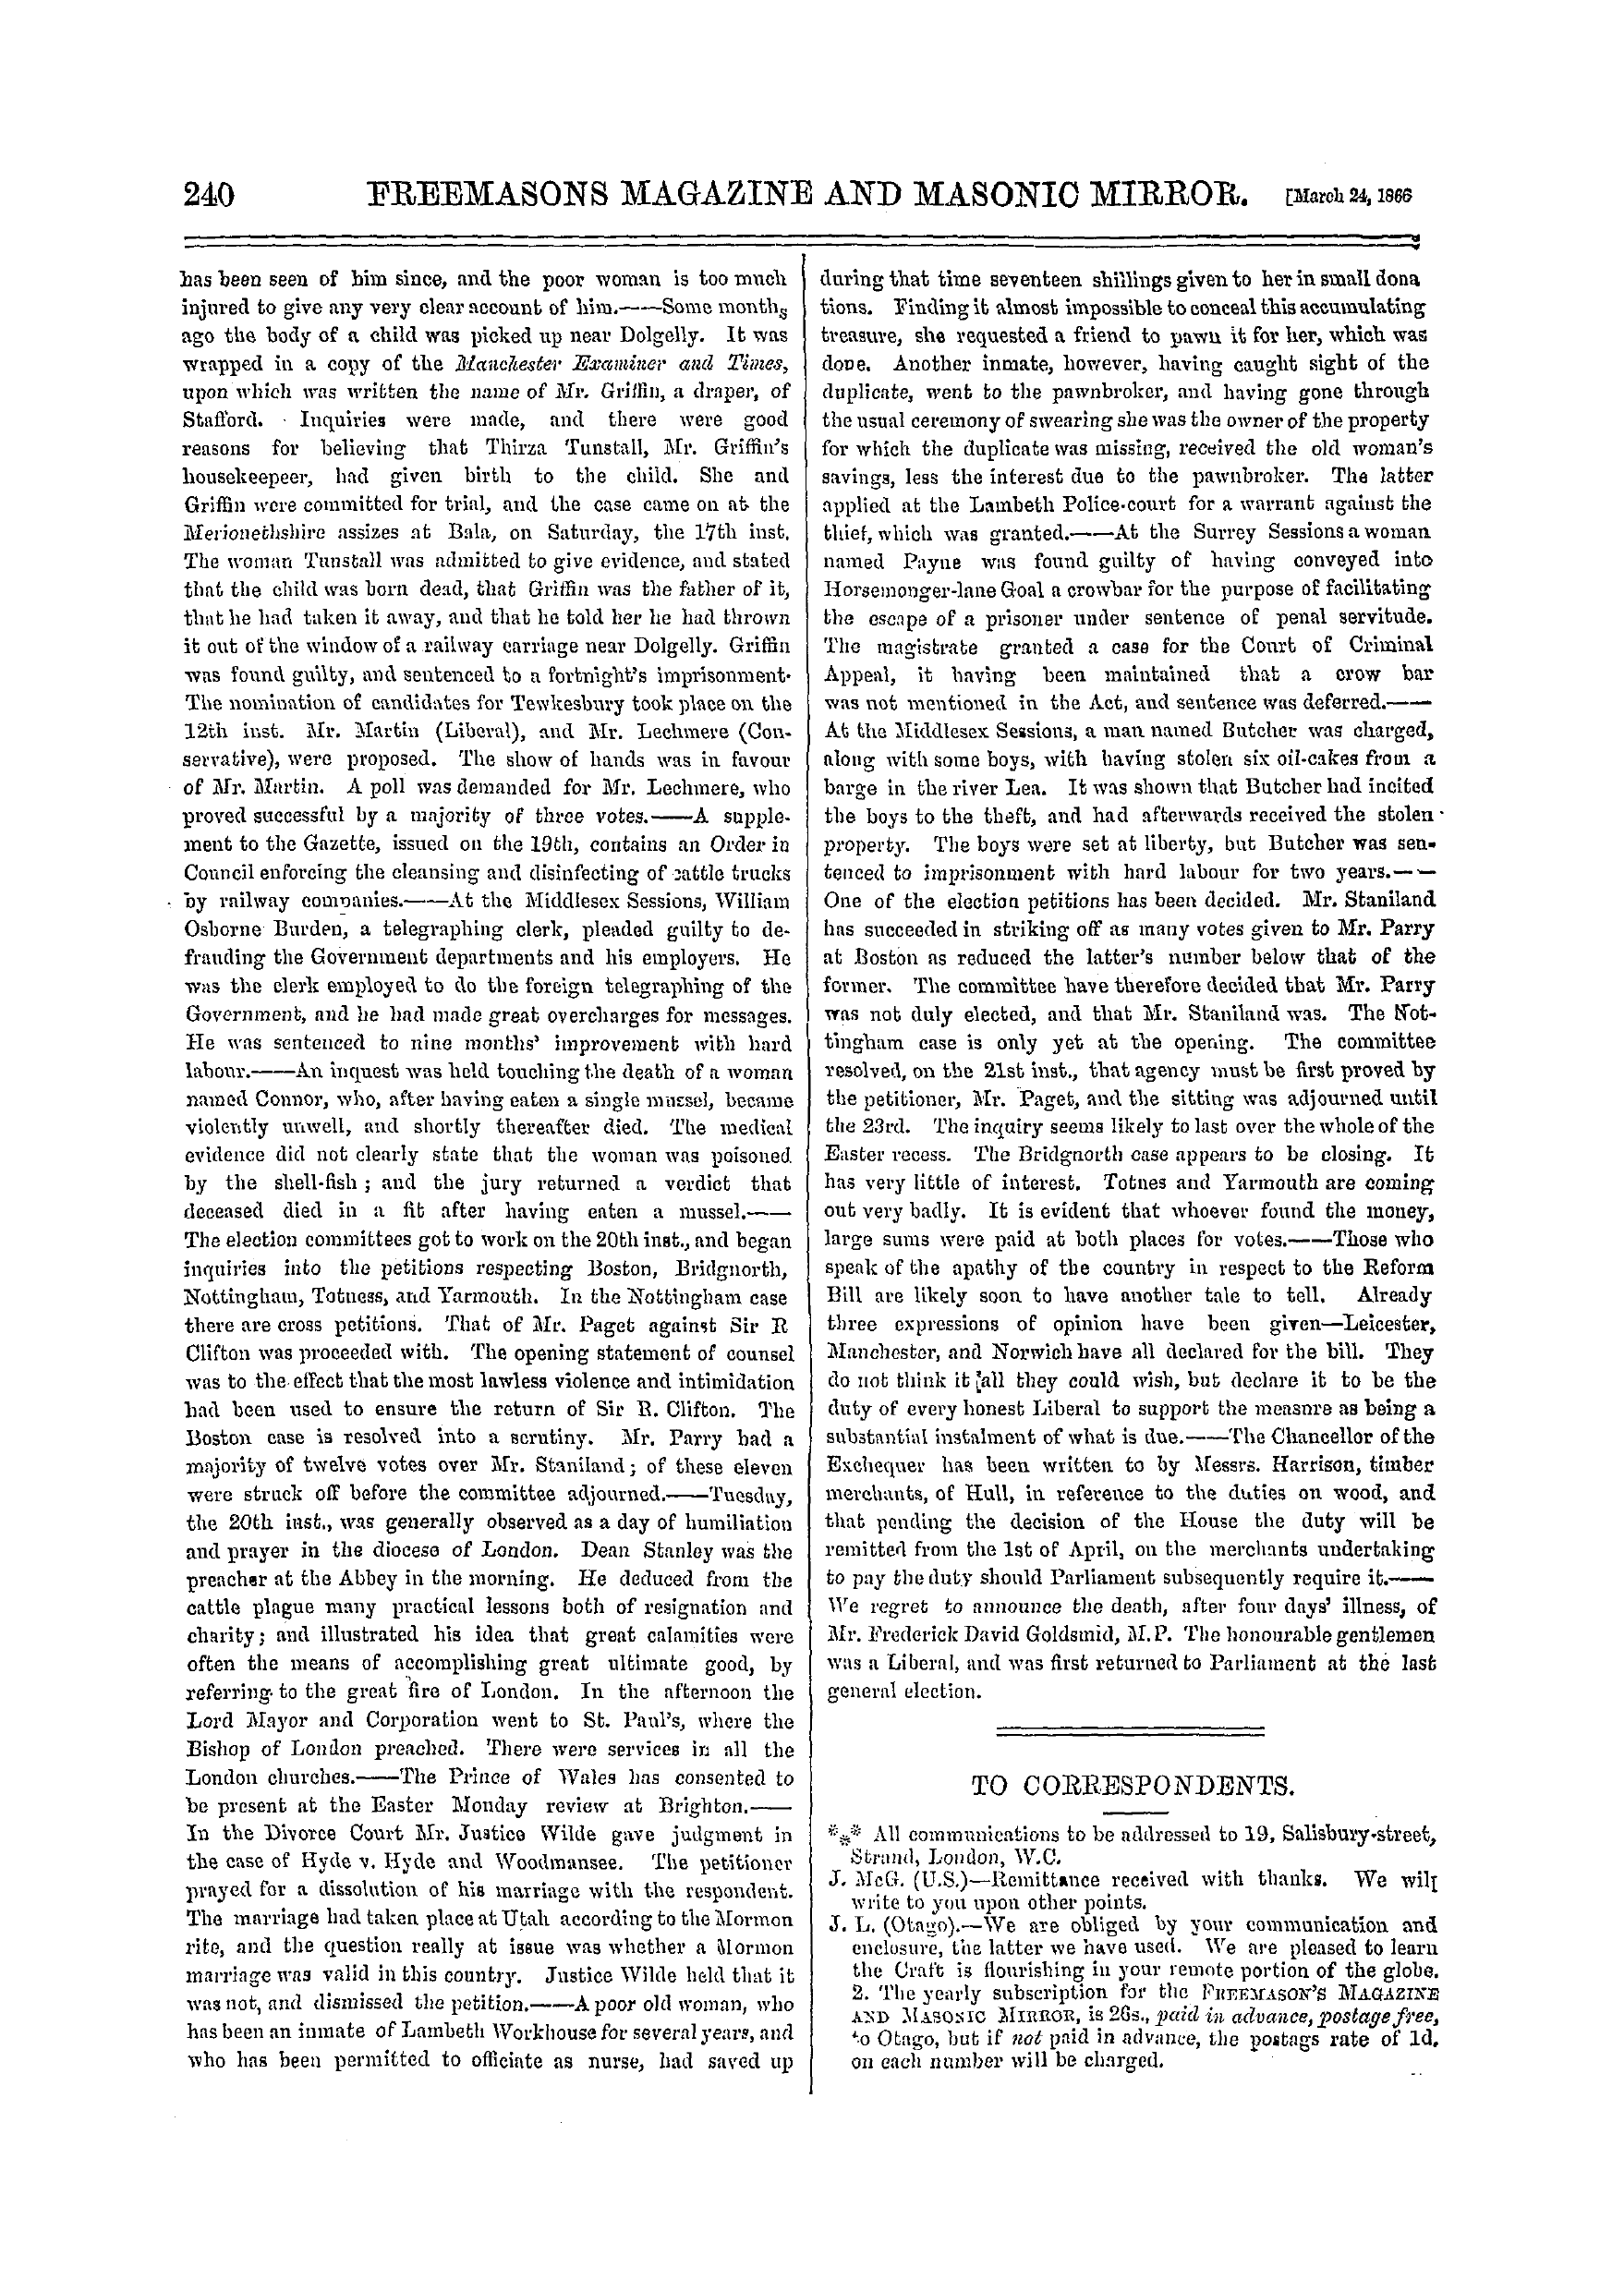 The Freemasons' Monthly Magazine: 1866-03-24 - The Week.